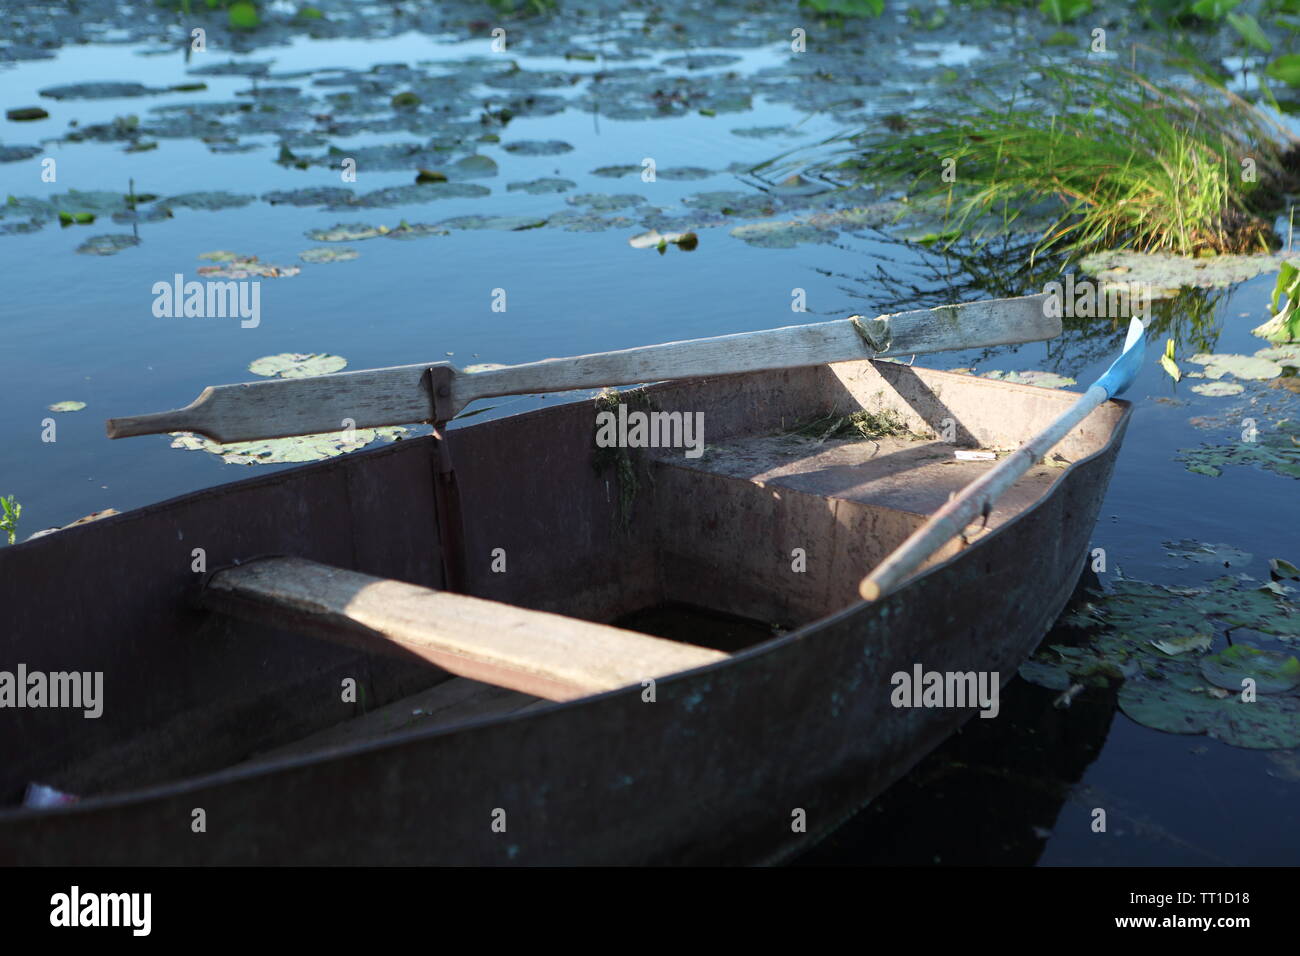 https://c8.alamy.com/comp/TT1D18/old-fishing-boat-in-the-pond-TT1D18.jpg